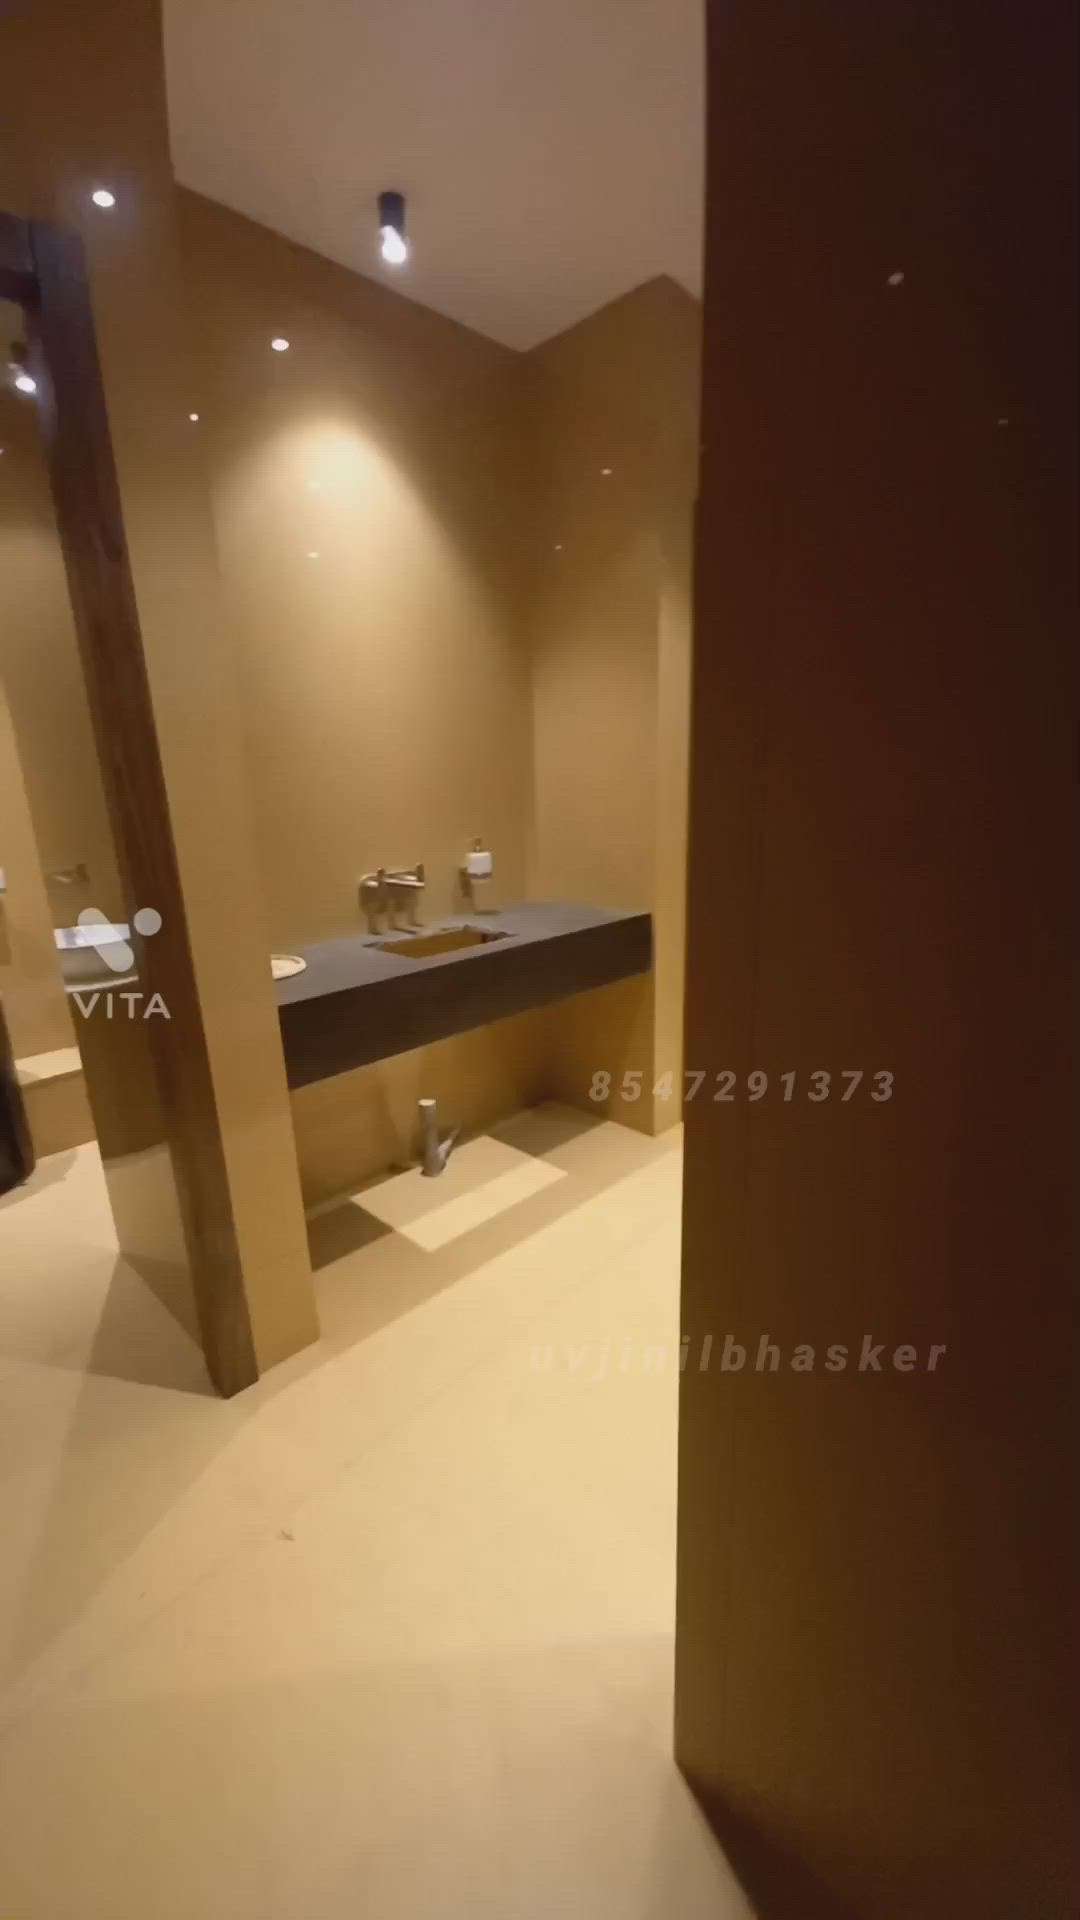 Bathroom Designs by Flooring Uv Jinilbhasker, Kozhikode | Kolo